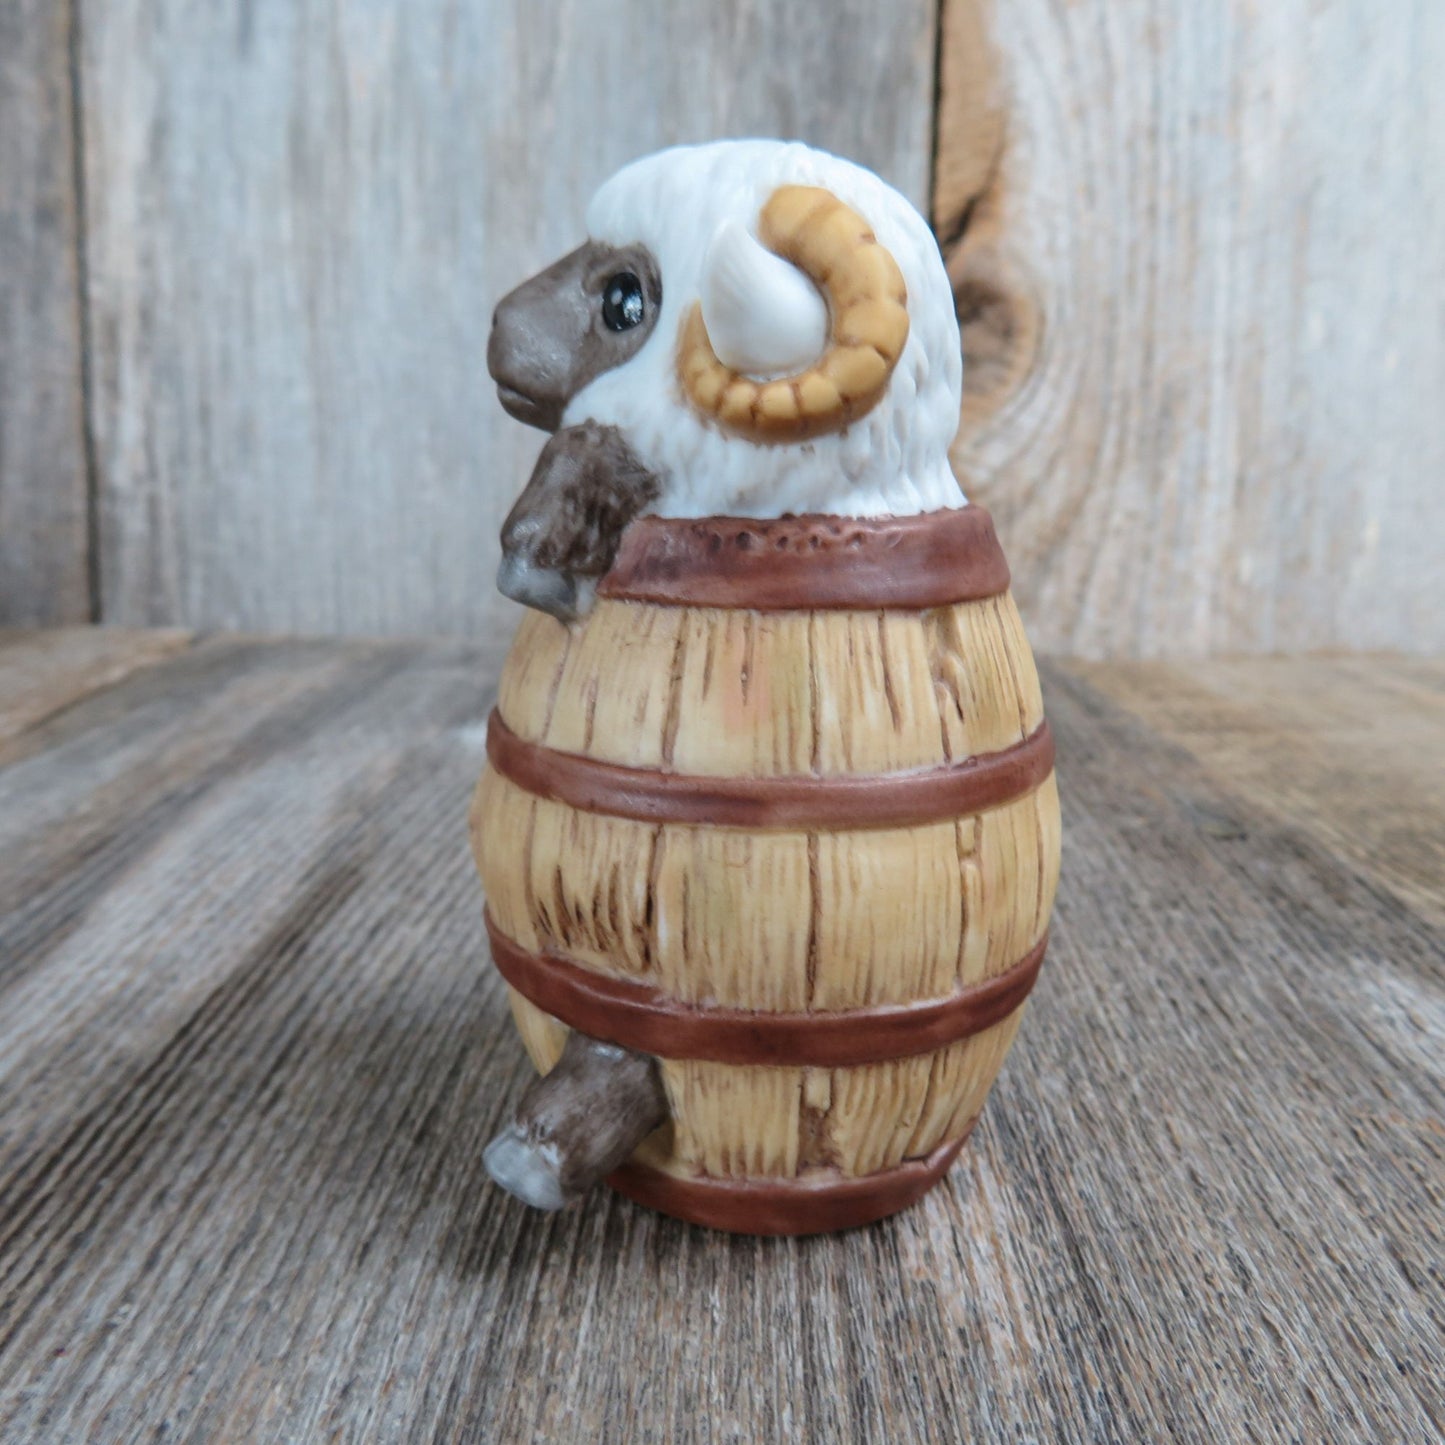 Vintage Sheep in a Barrel Figurine Ram with Horns Wooden Wine Keg Ceramic